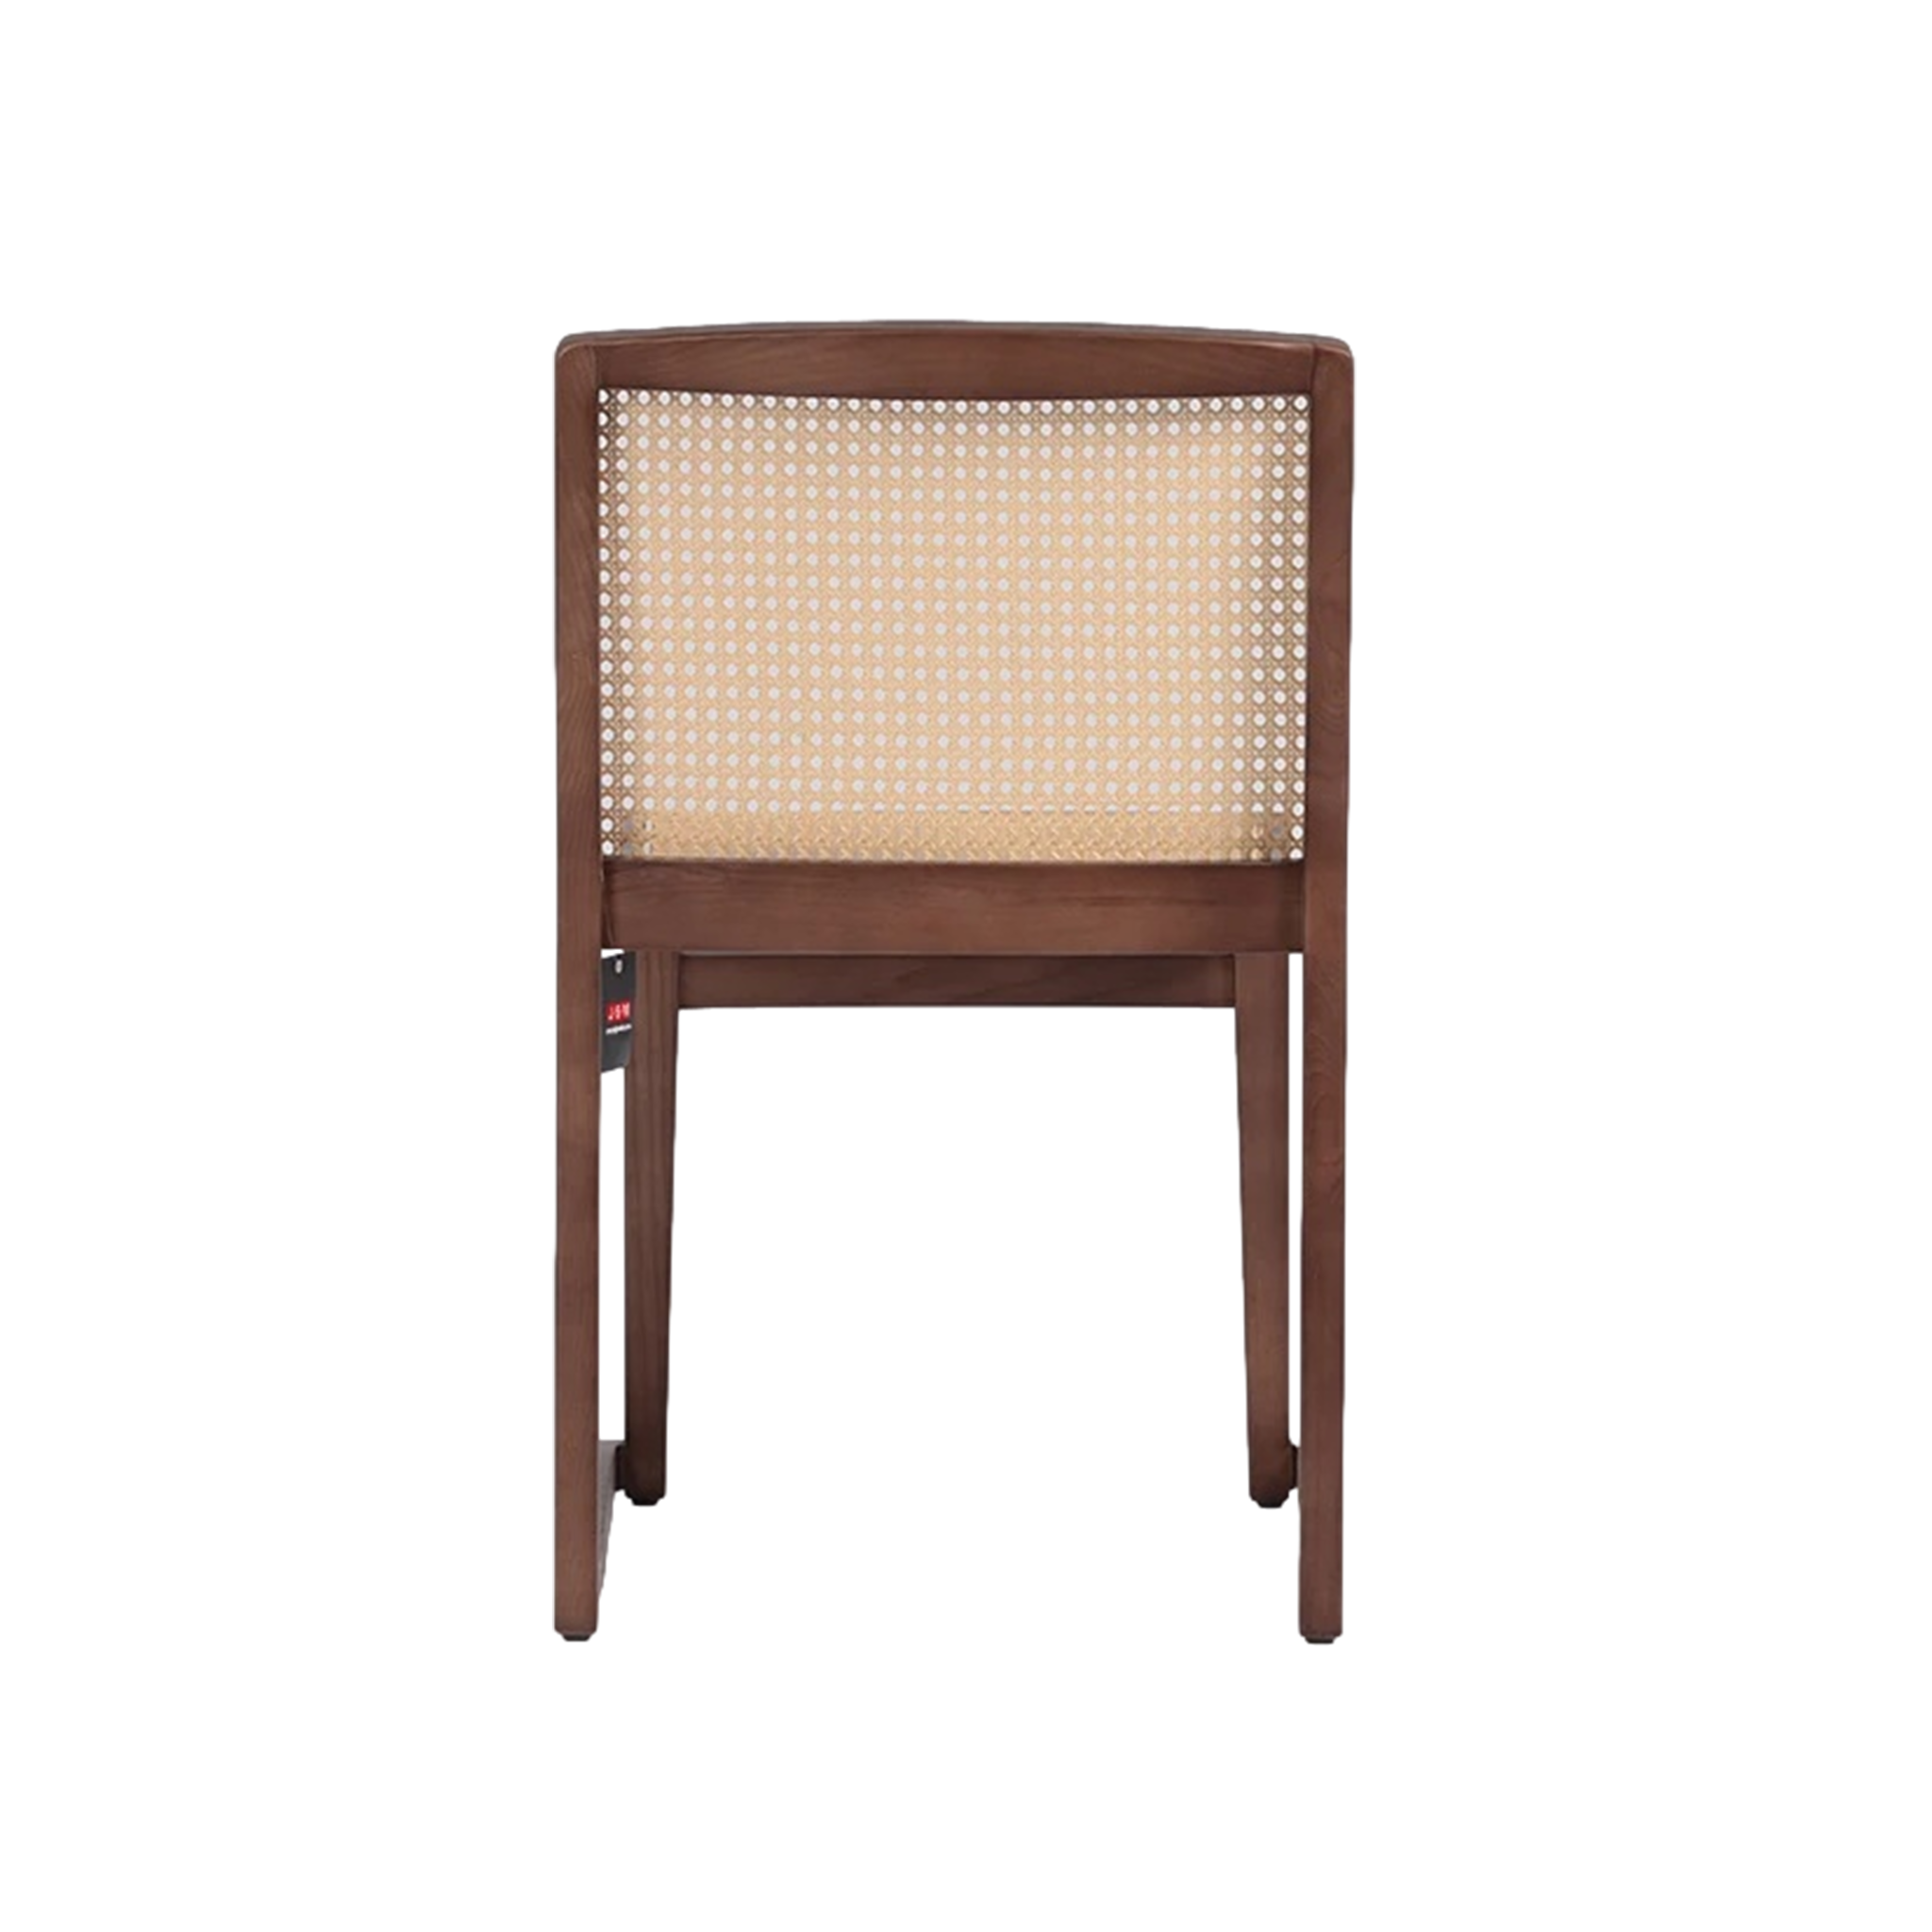 Marcel Chair